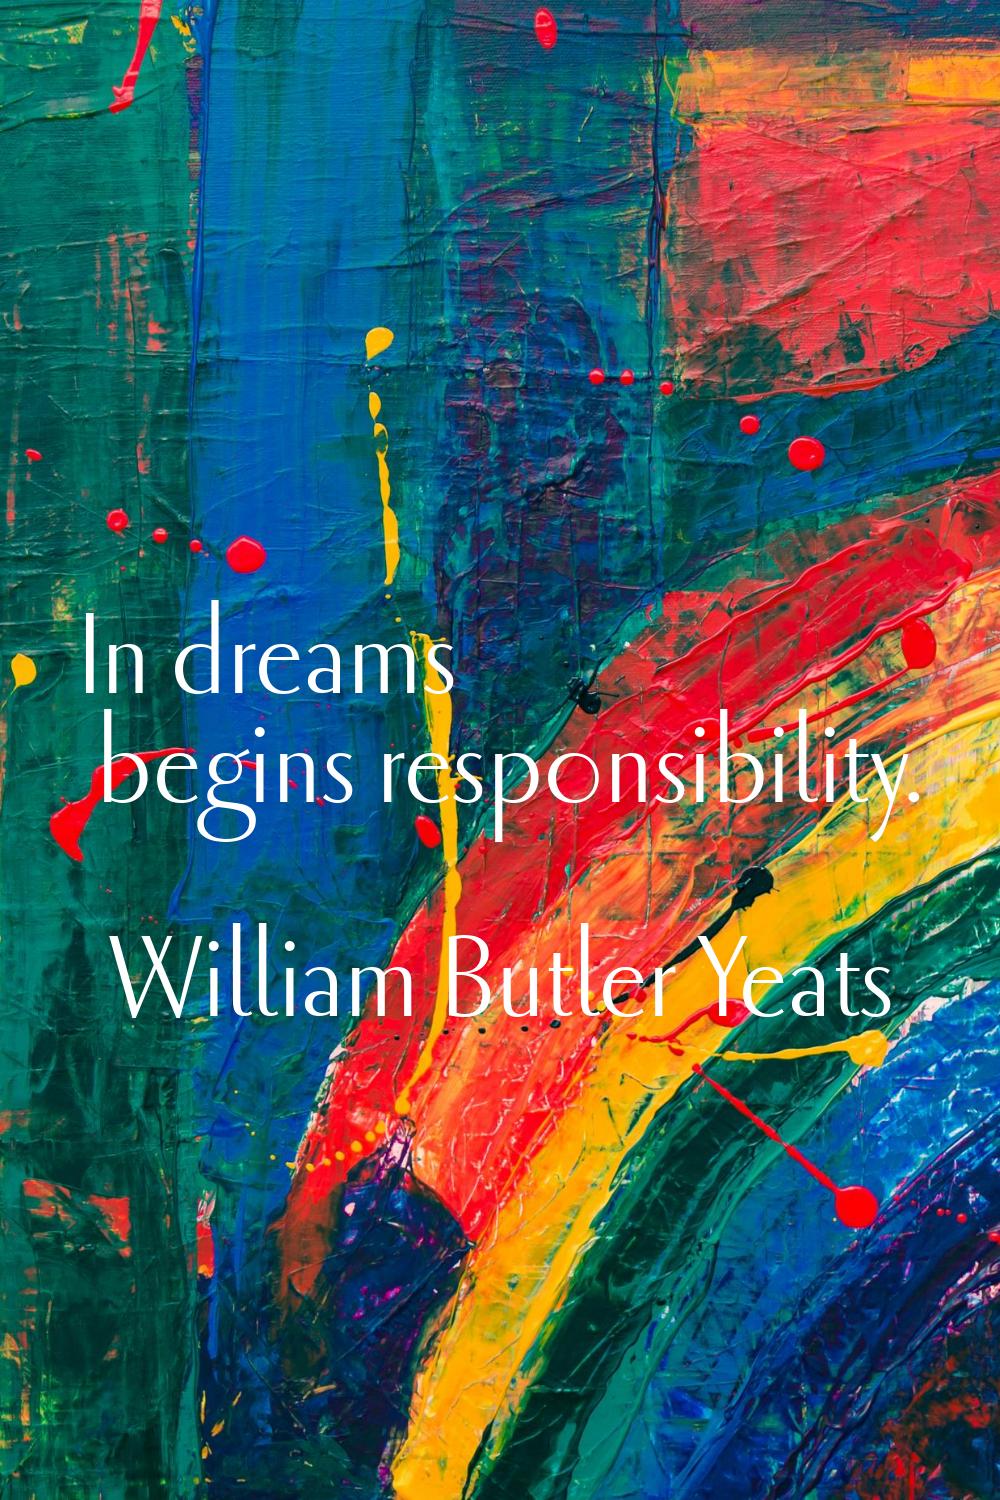 In dreams begins responsibility.